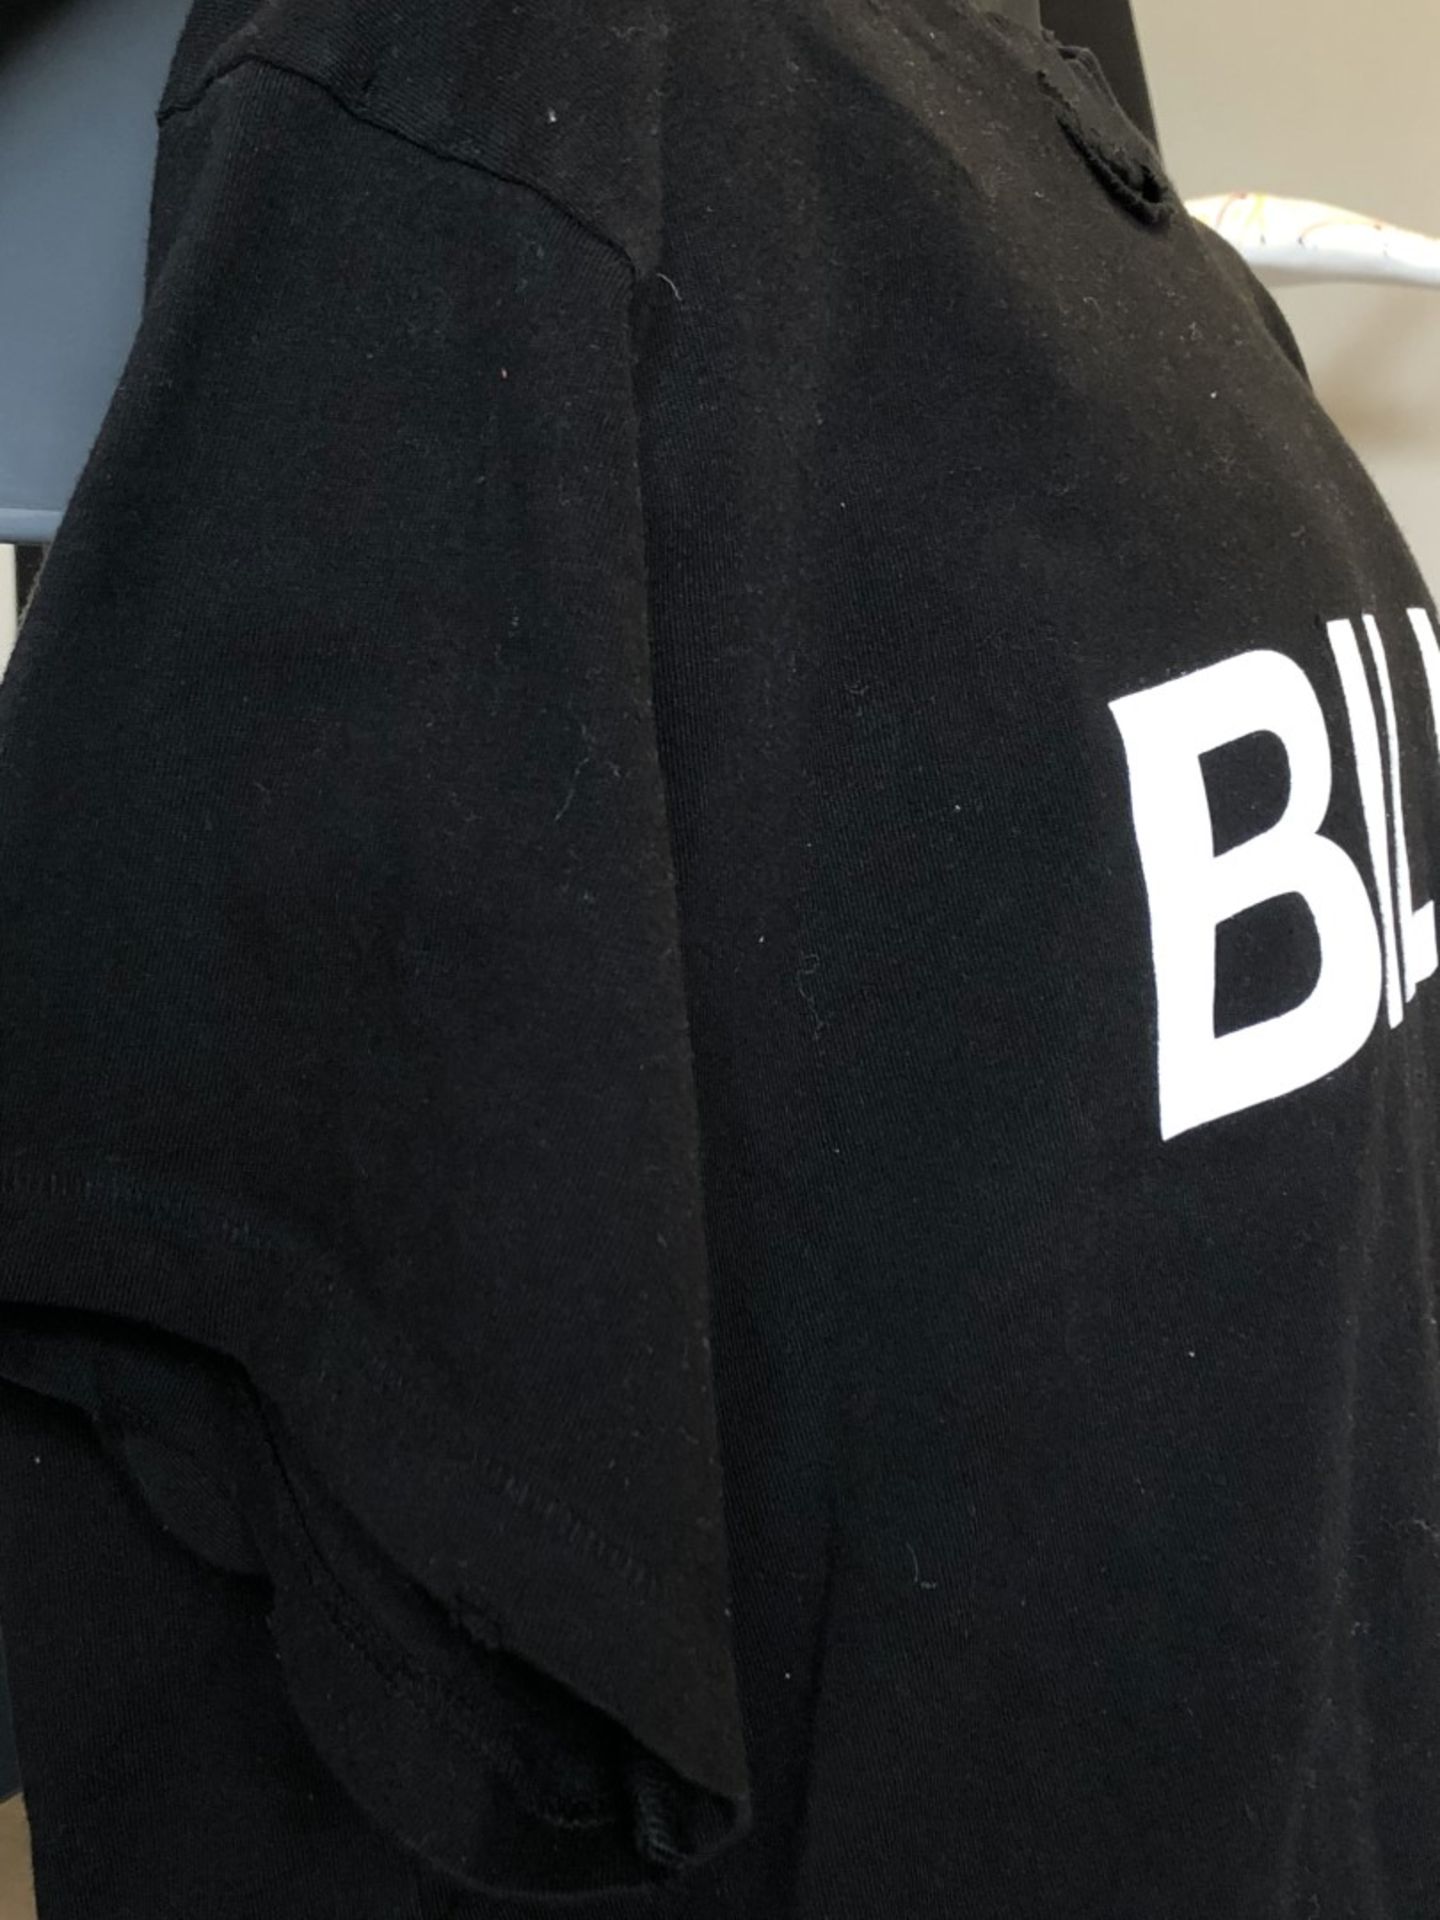 1 x Men's Genuine Billy Designer Distressed T-Shirt In Black "Billy" - SIZE: LARGE - Image 5 of 8